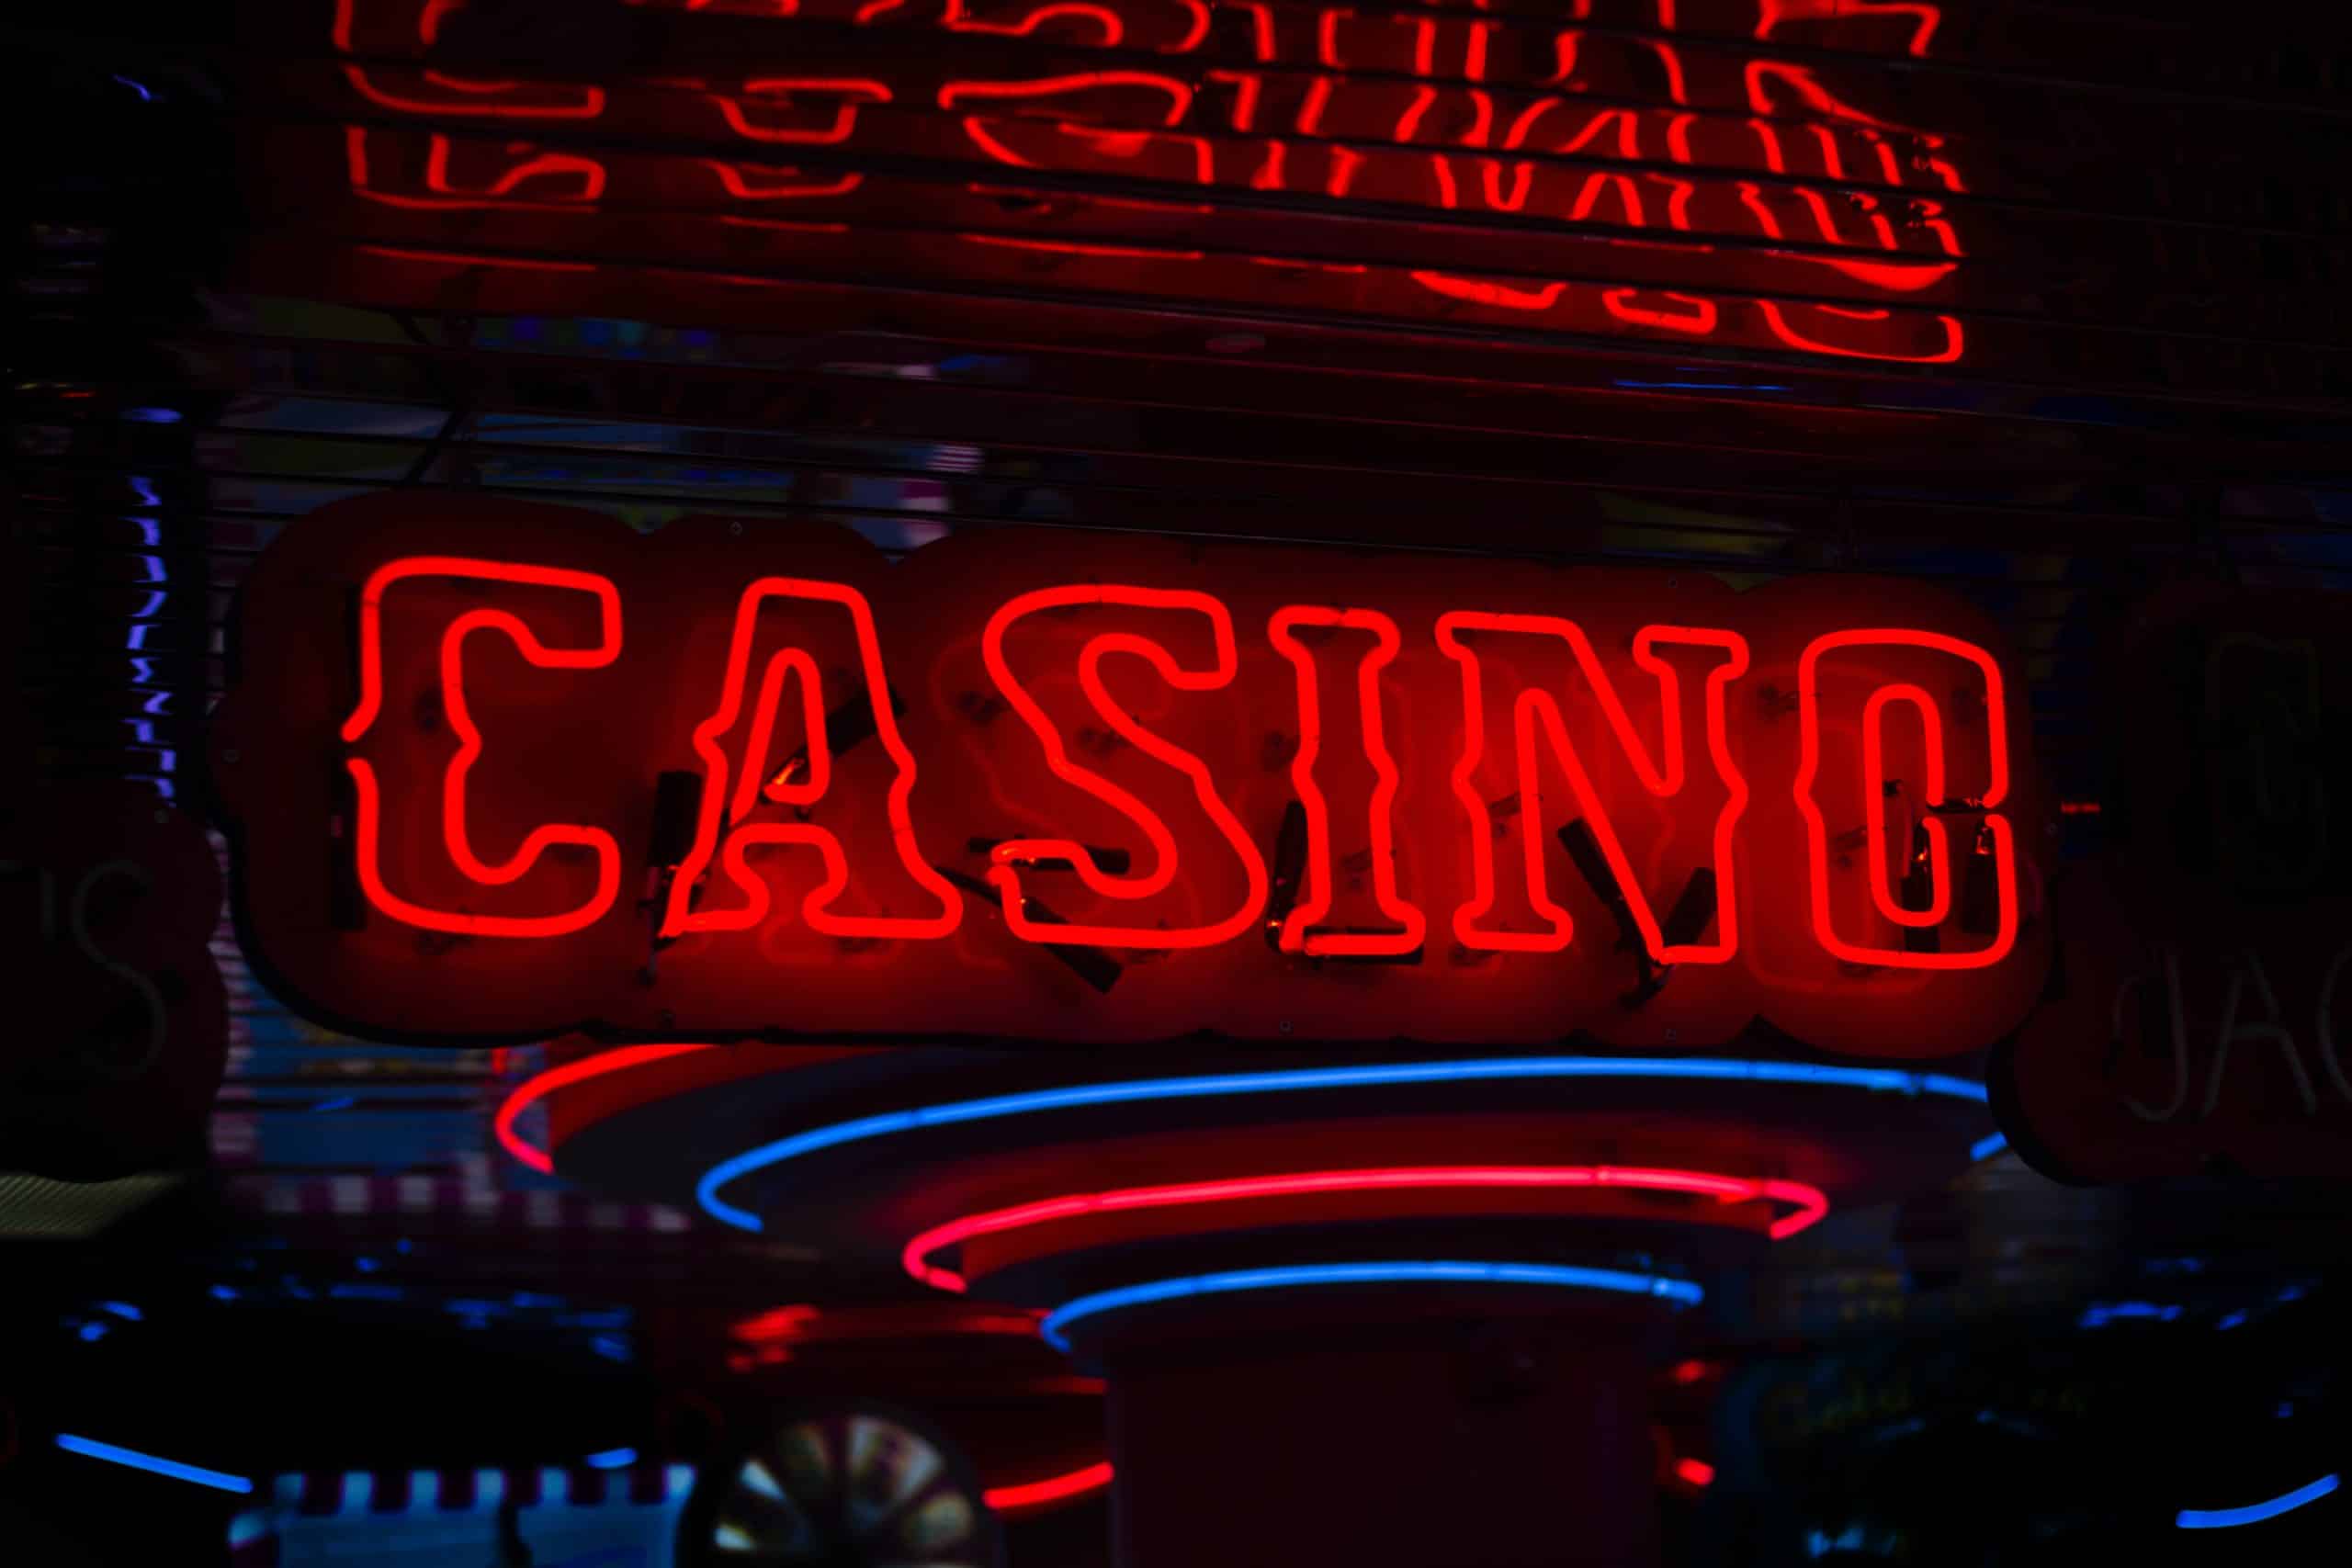 casino - Denemarken - online